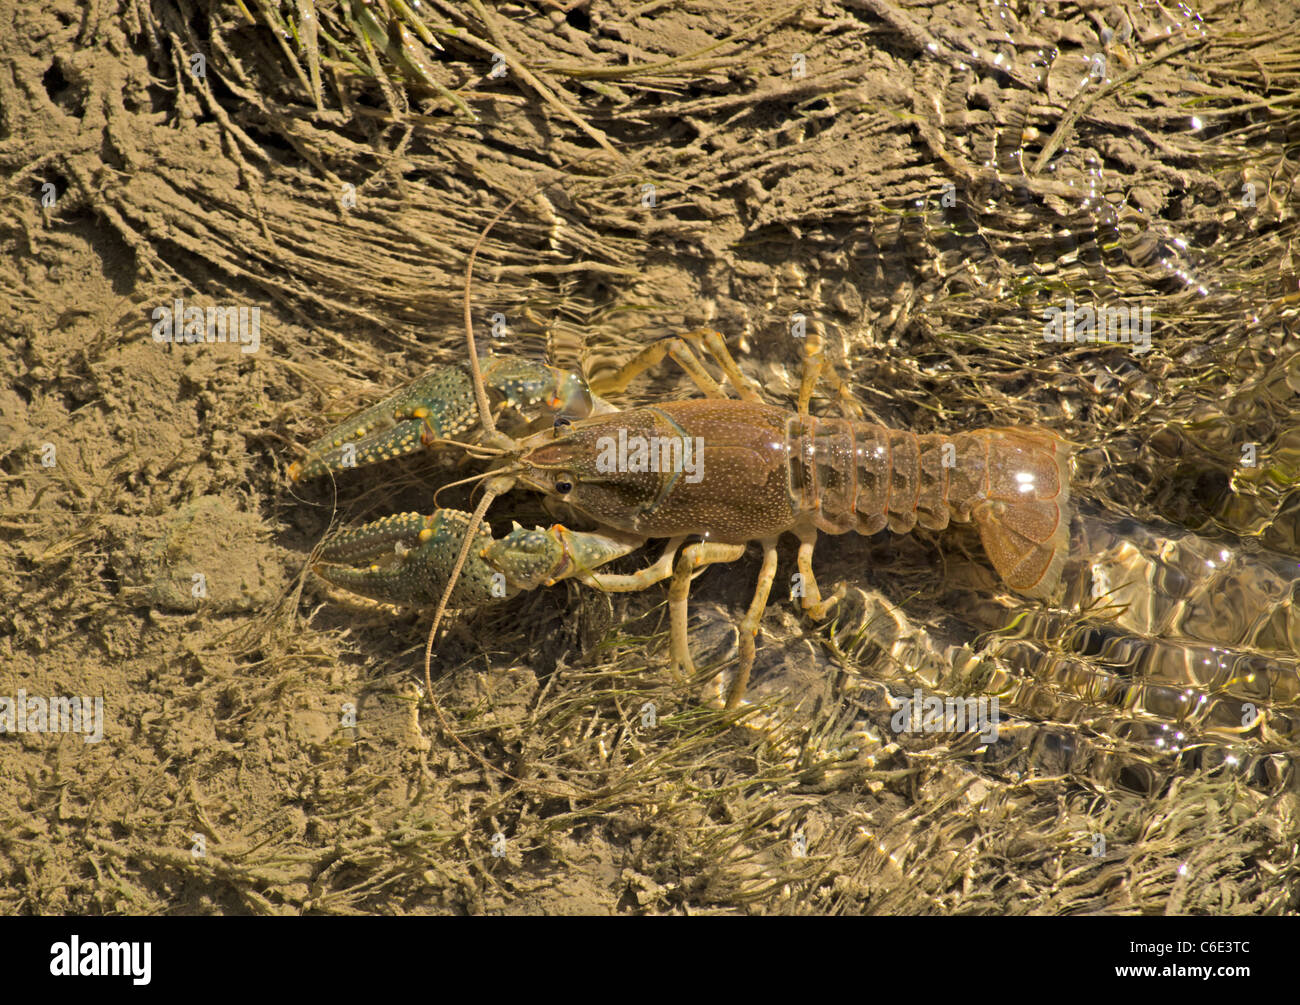 Virile crayfish (Orconectes virilis) in irrigation canal, Ridgway Colorado US. Photo taken in August. Stock Photo